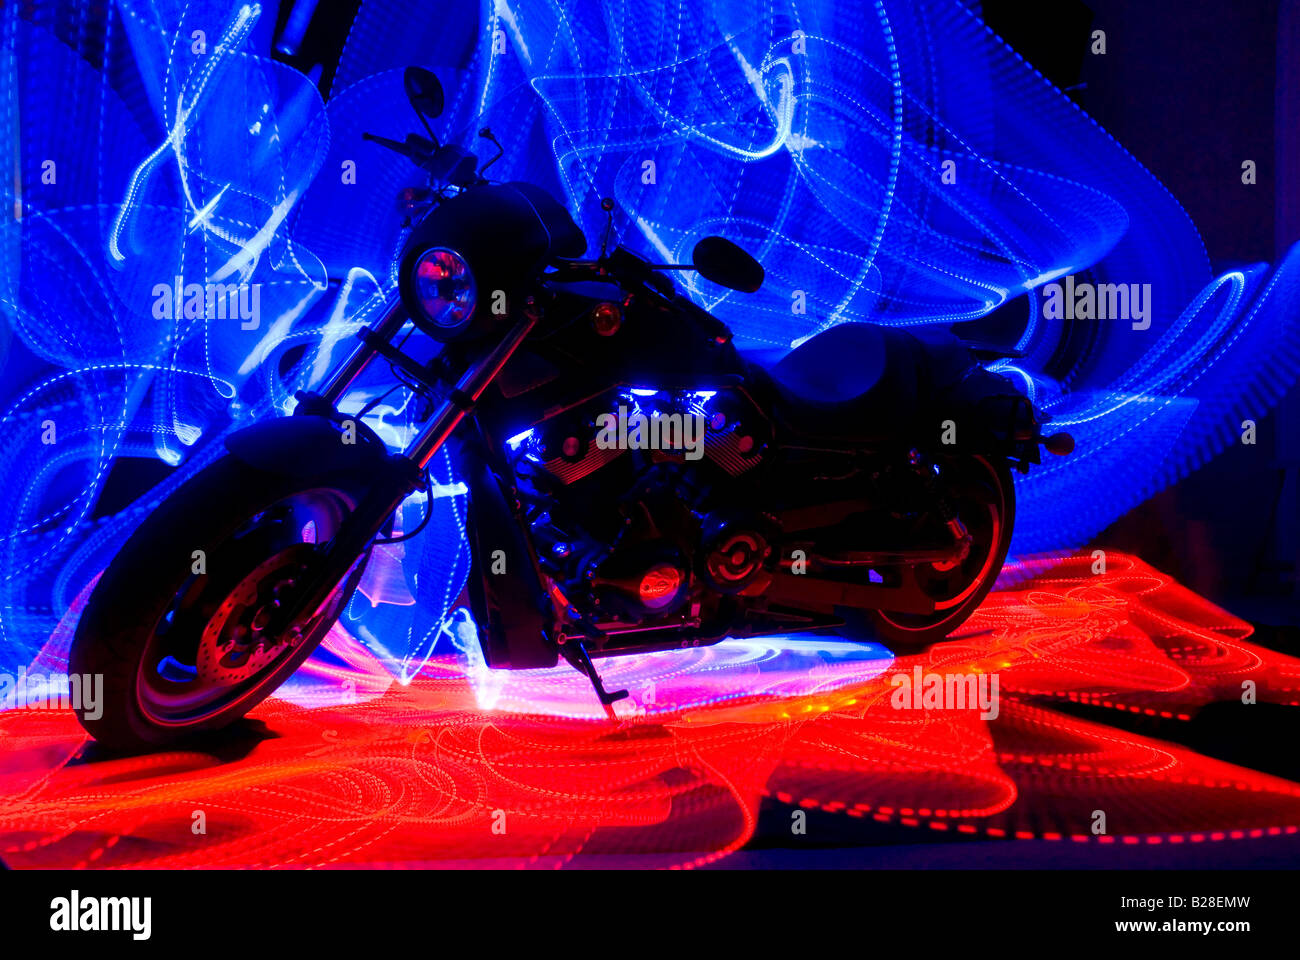 light painted Harley Davidson V Rod ( see also B2EWMWmatching image ) Stock Photo